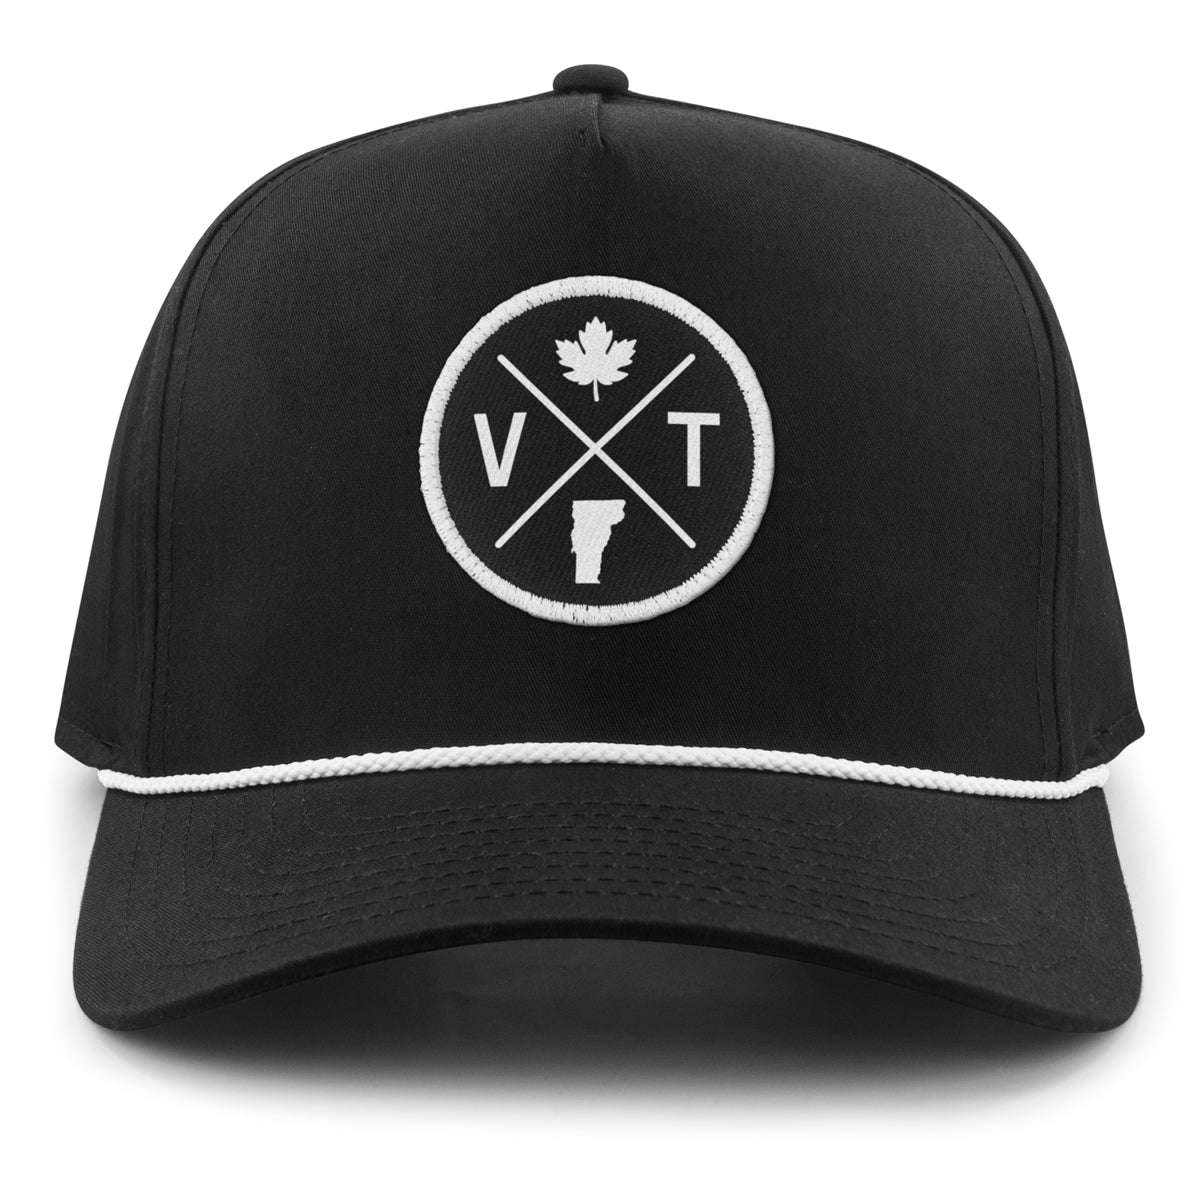 VT Circle Emblem Rope Performance Hat